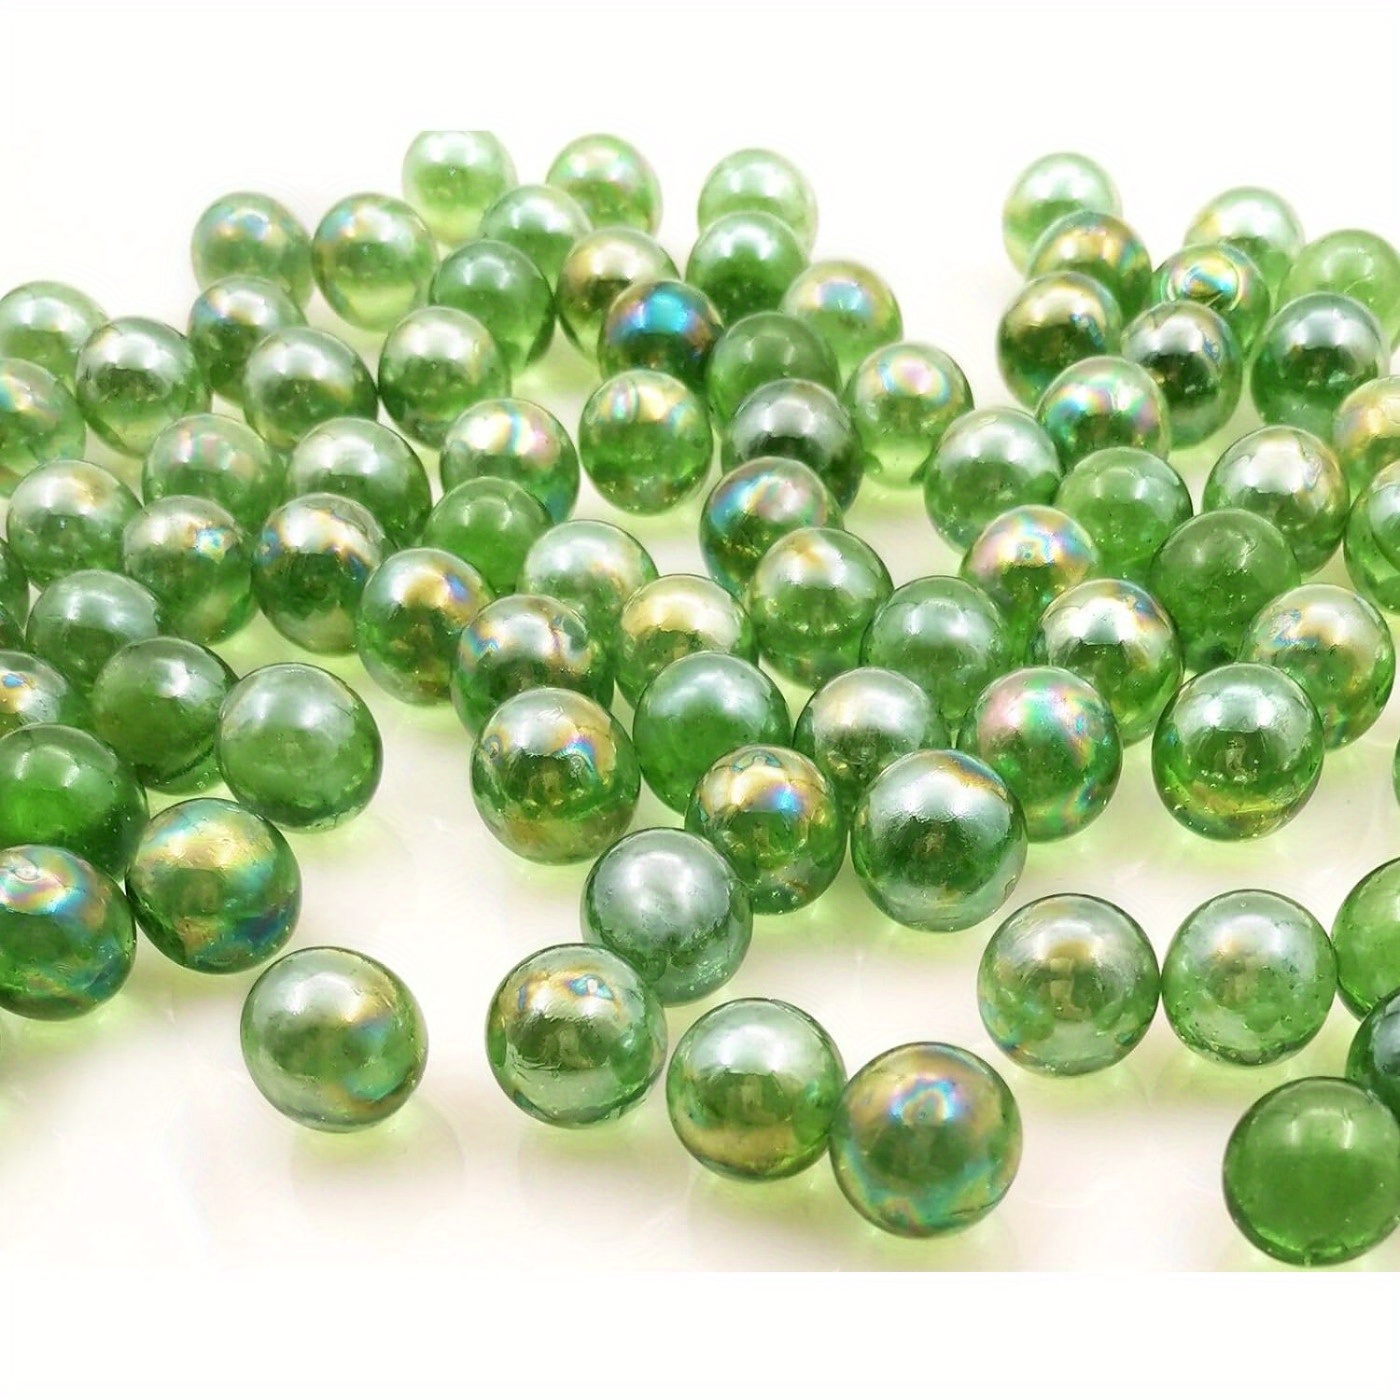 WGV Flat Marbles, Pebbles, Glass Gems for Vase Fillers, Wedding,  Decoration, Crystal Rocks, Blue (20 Pounds, Approx 2000 pcs)